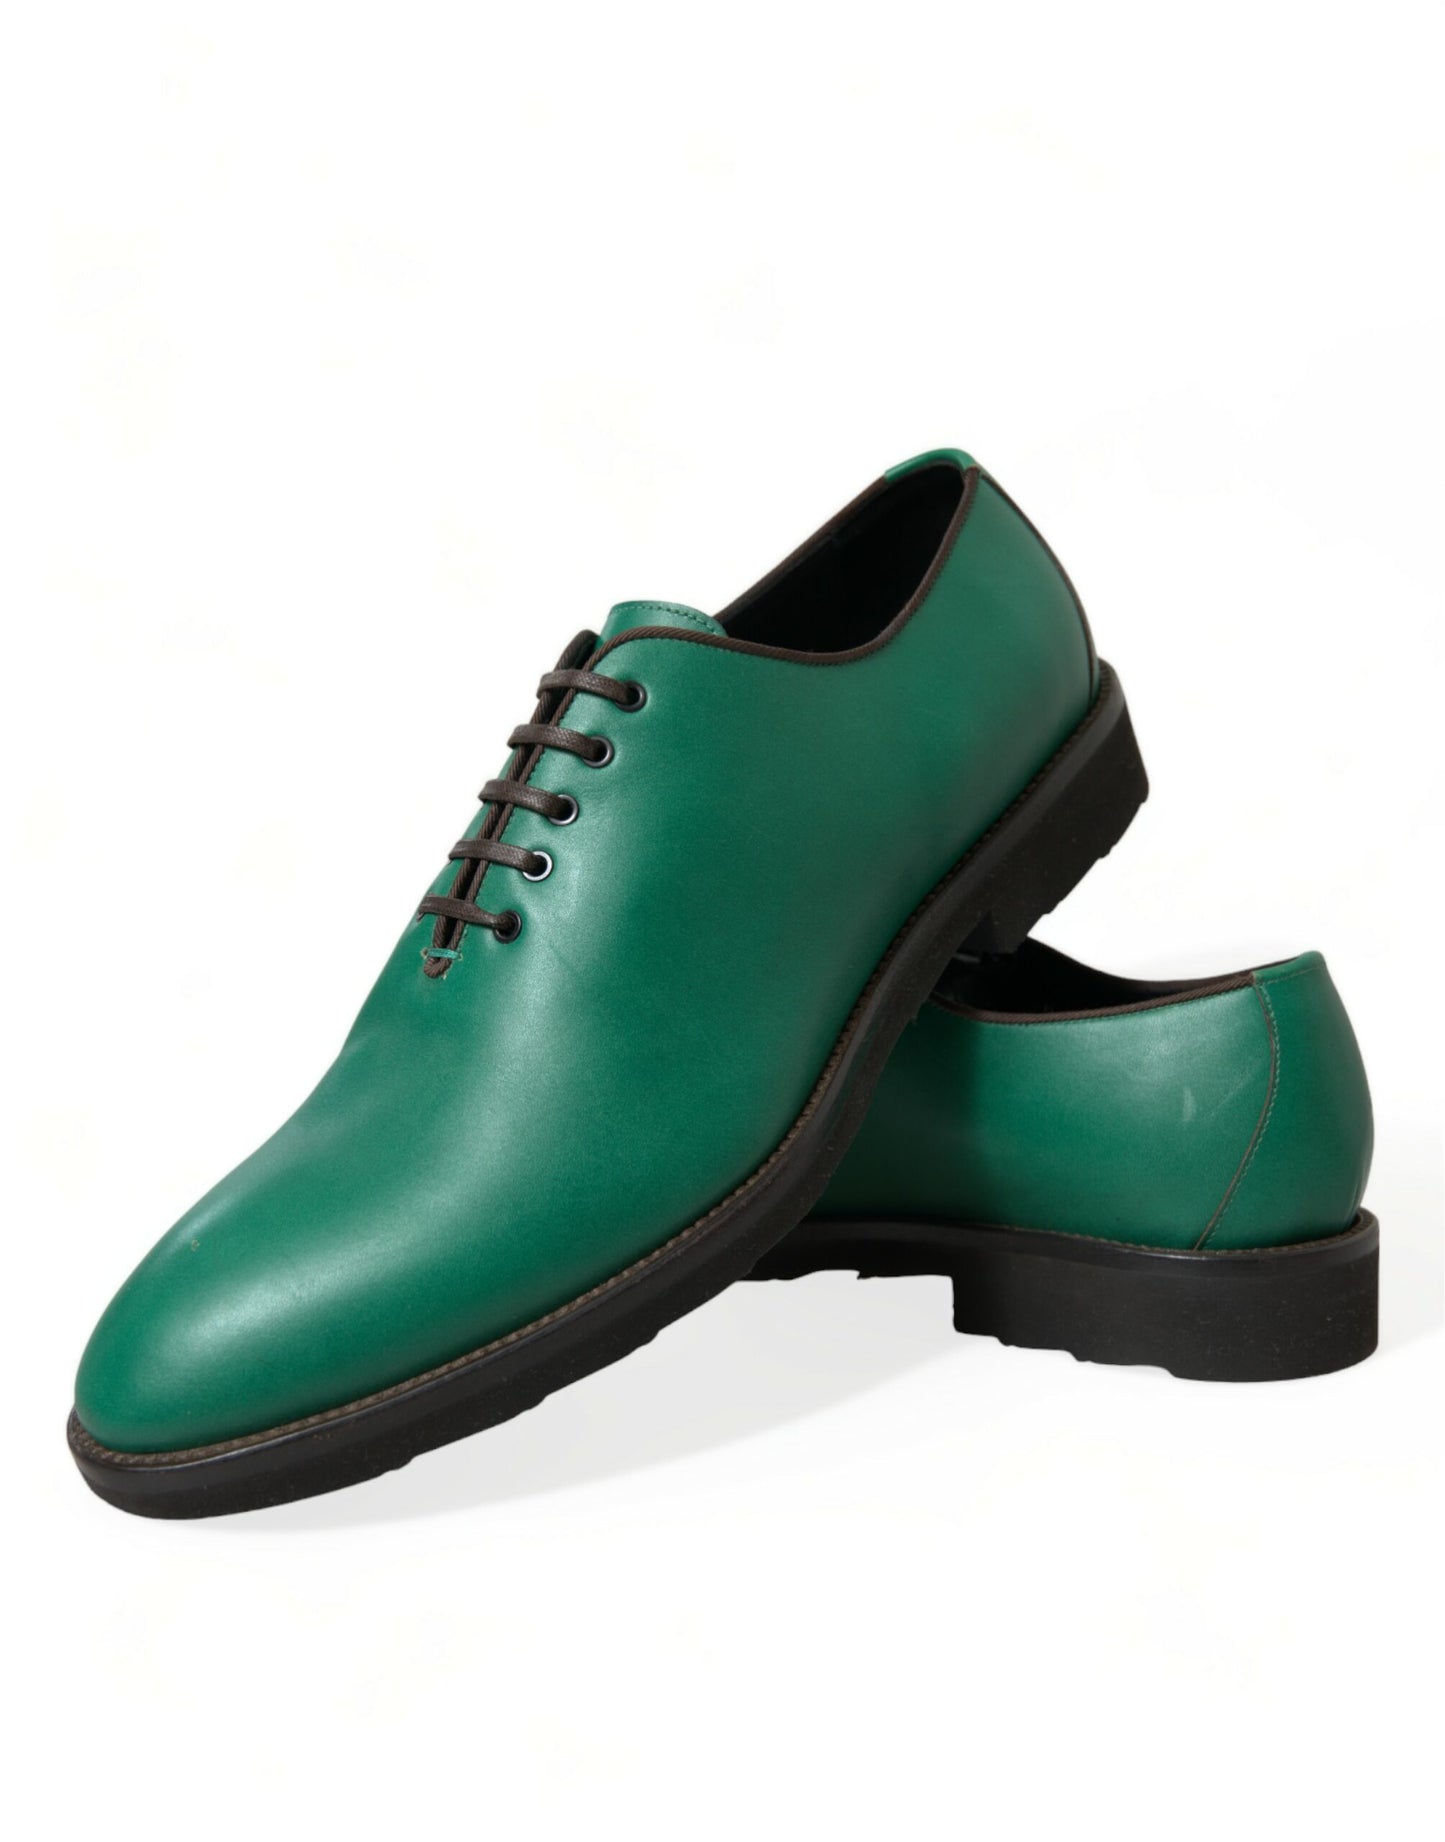 Elegant Green Leather Oxford Dress Shoes